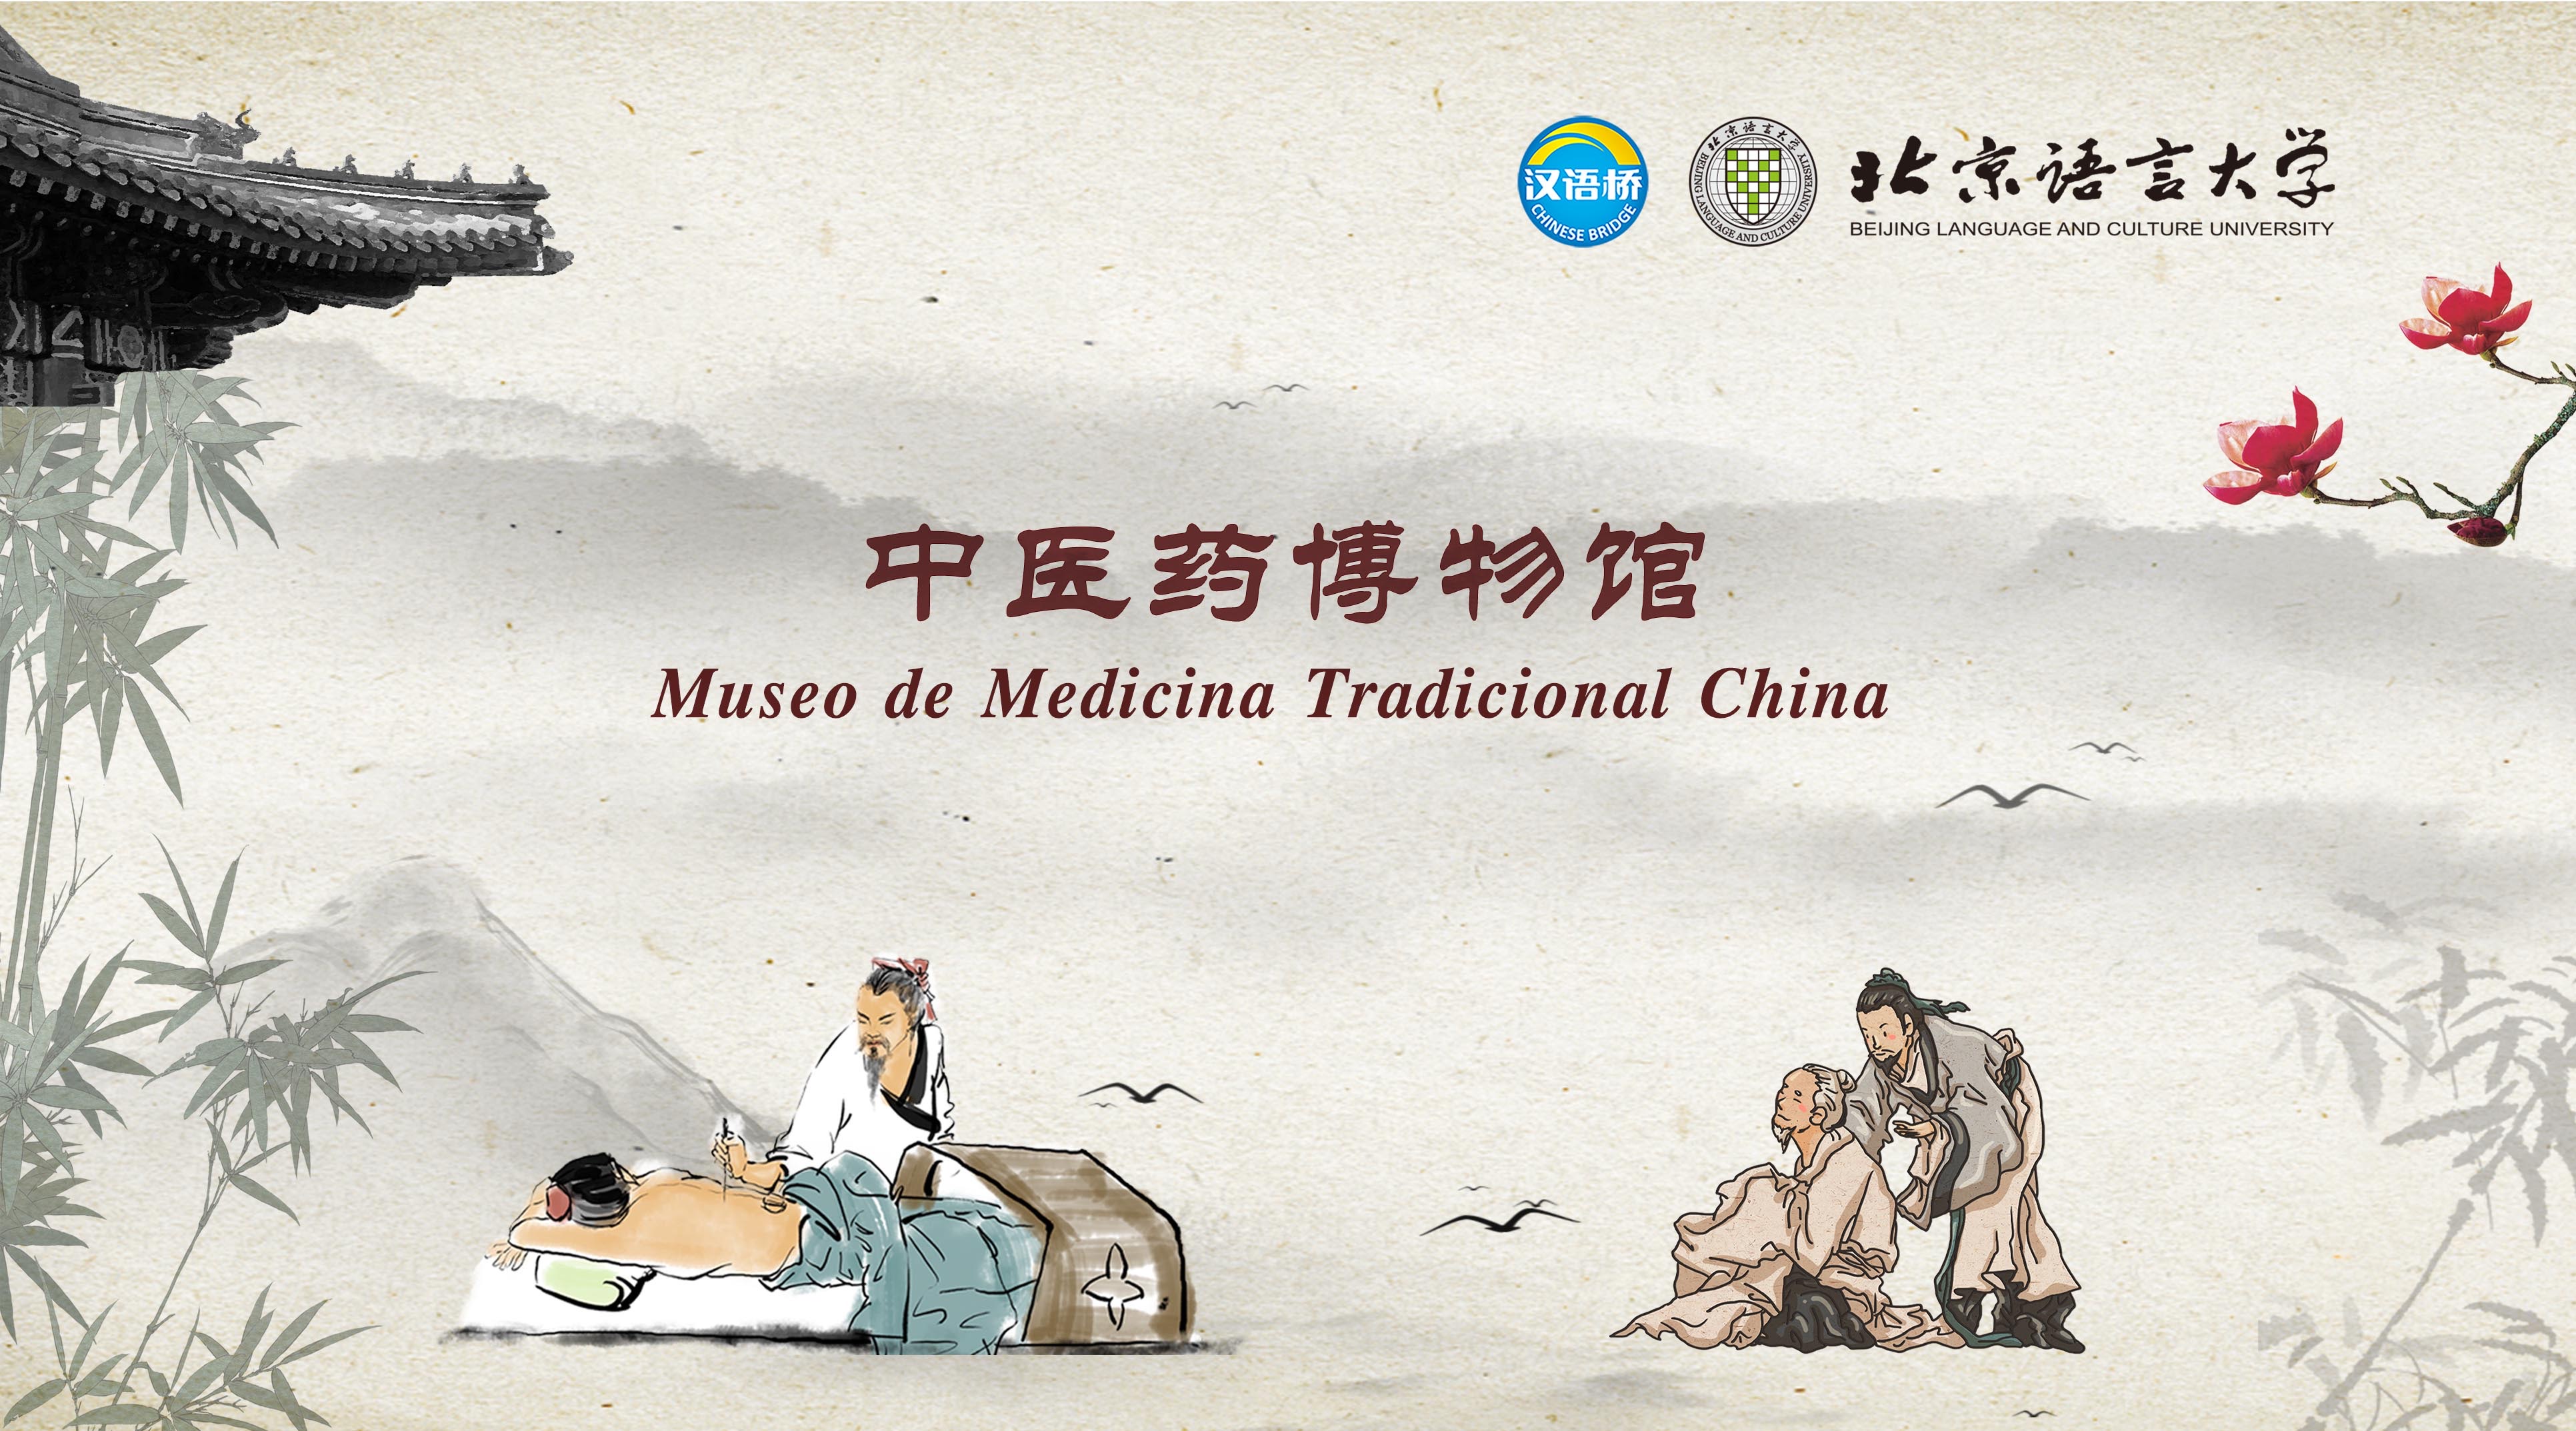 Museo de Medicina Tradicional China